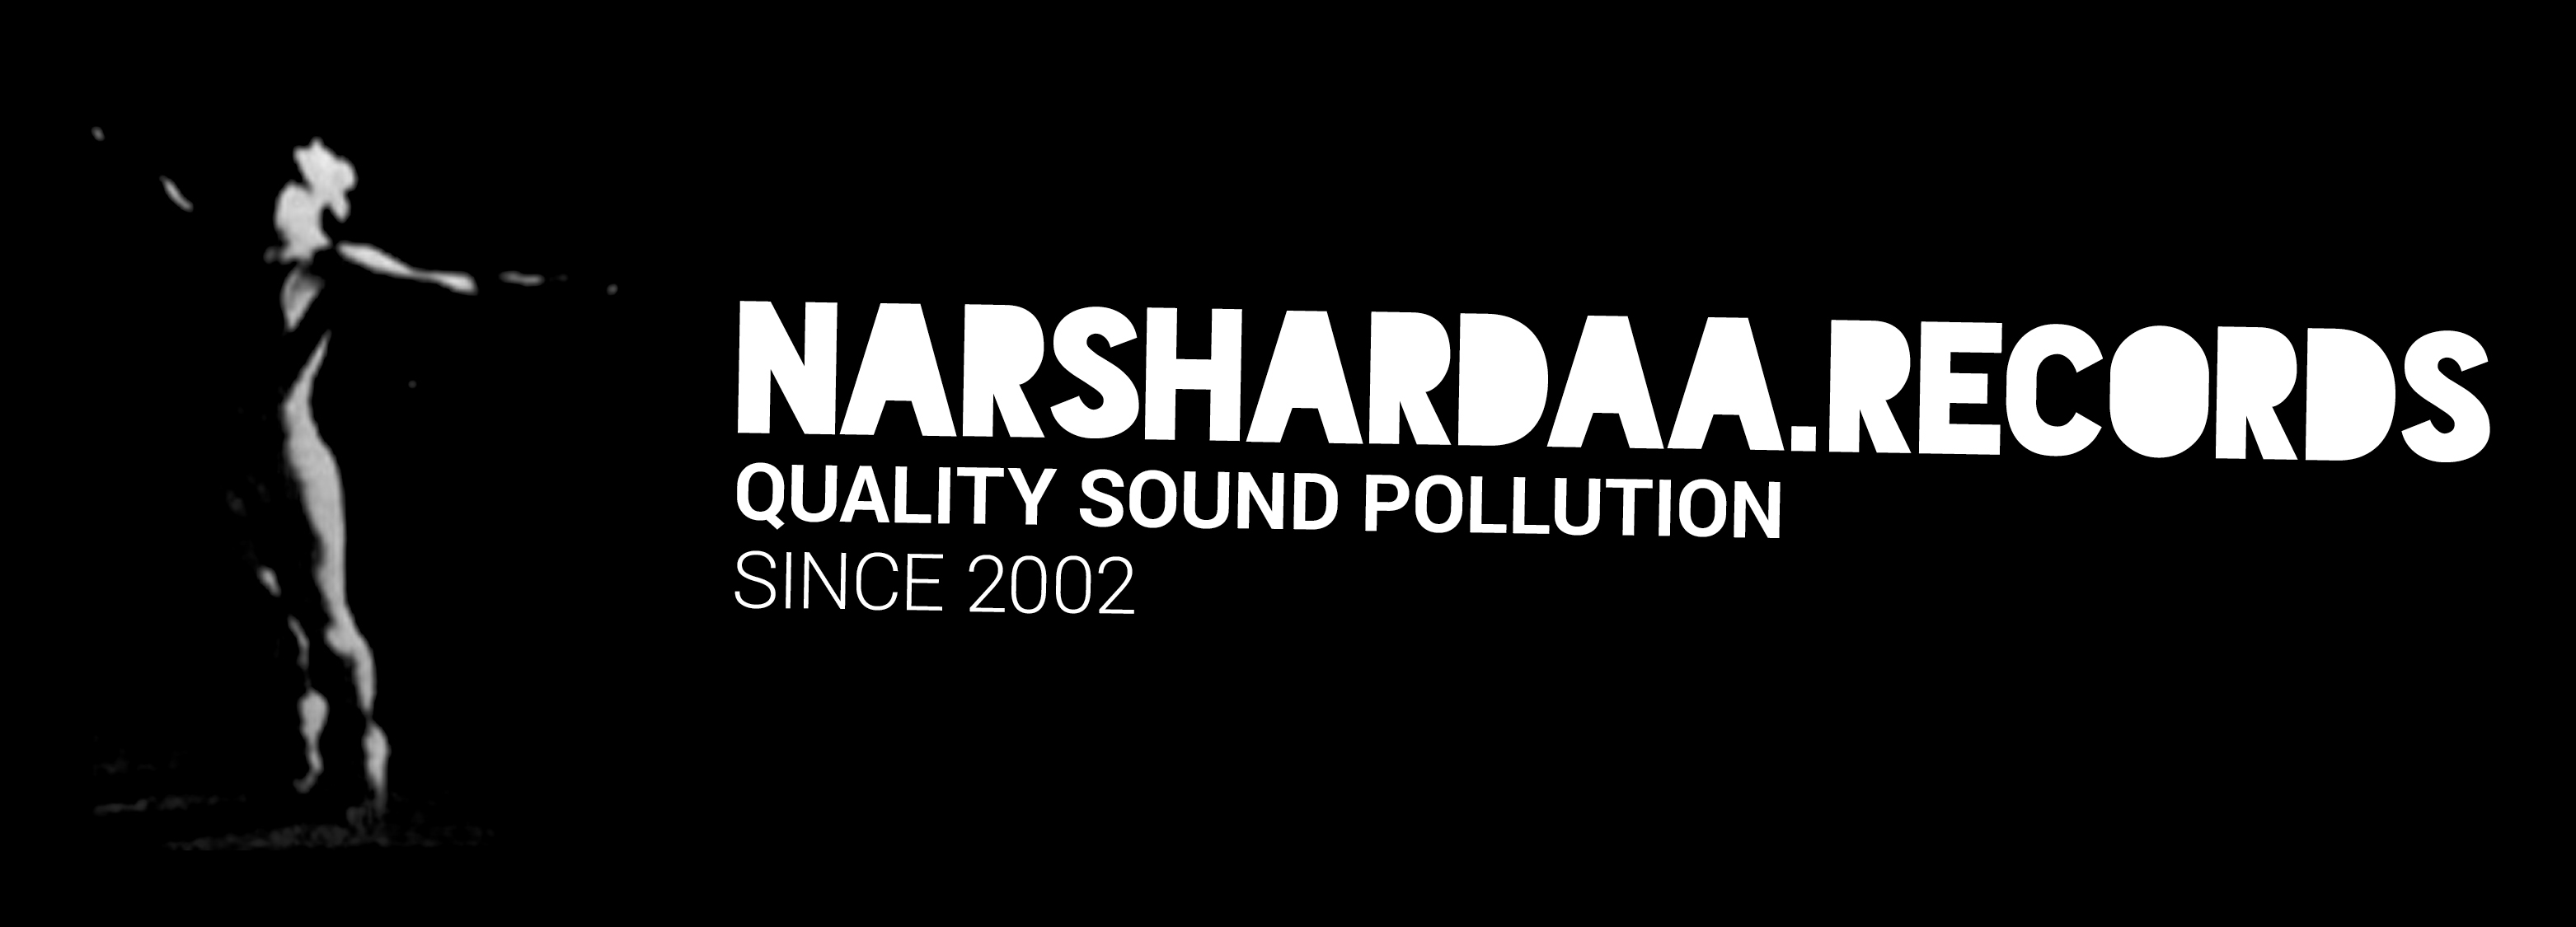 Narshardaa.Records Logo